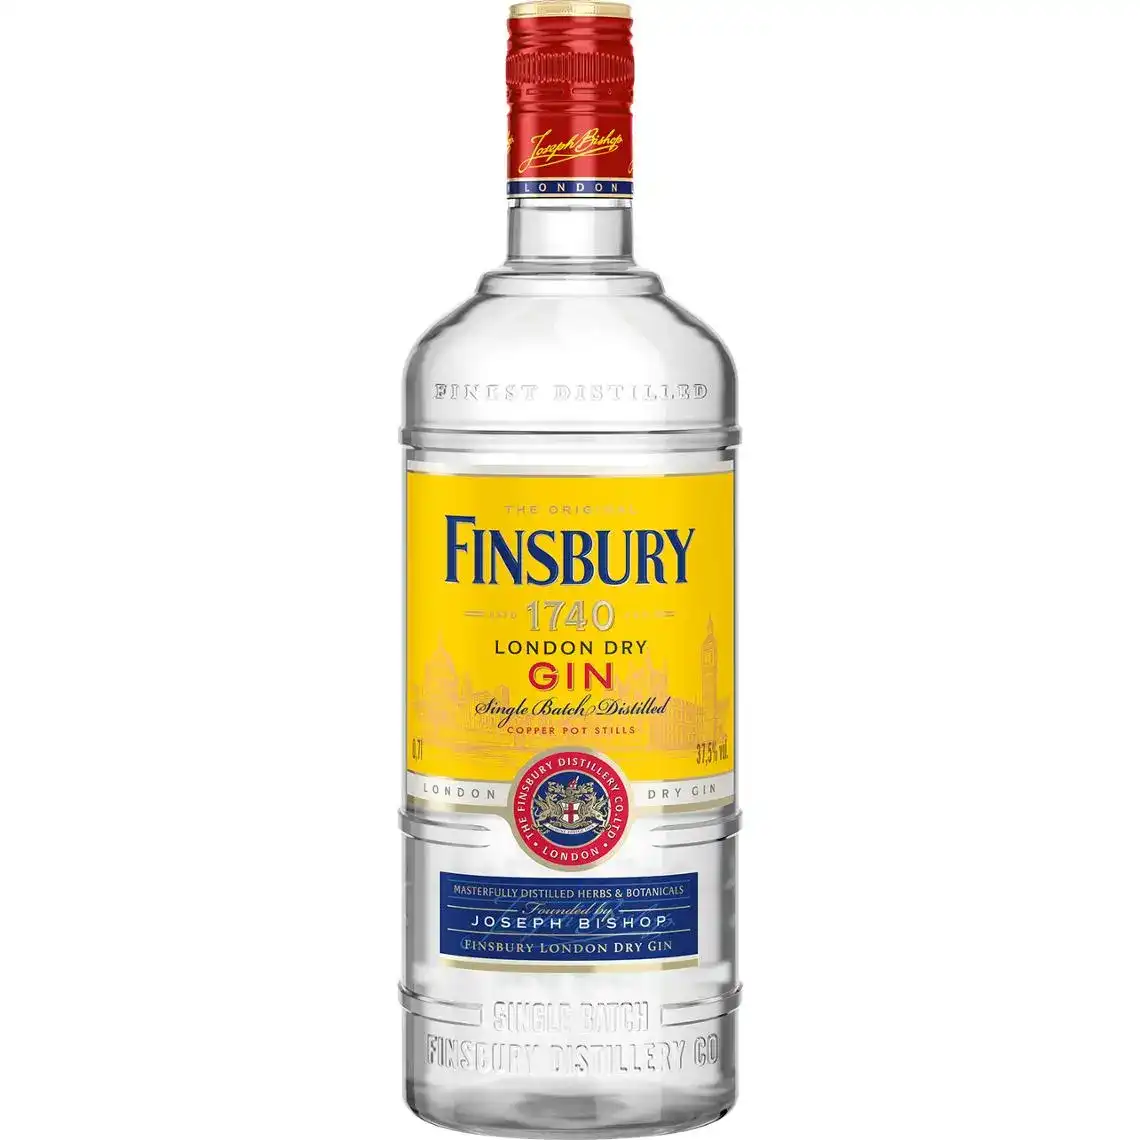 Джин Finsbury London Dry Gin 37.5% 0.7 л